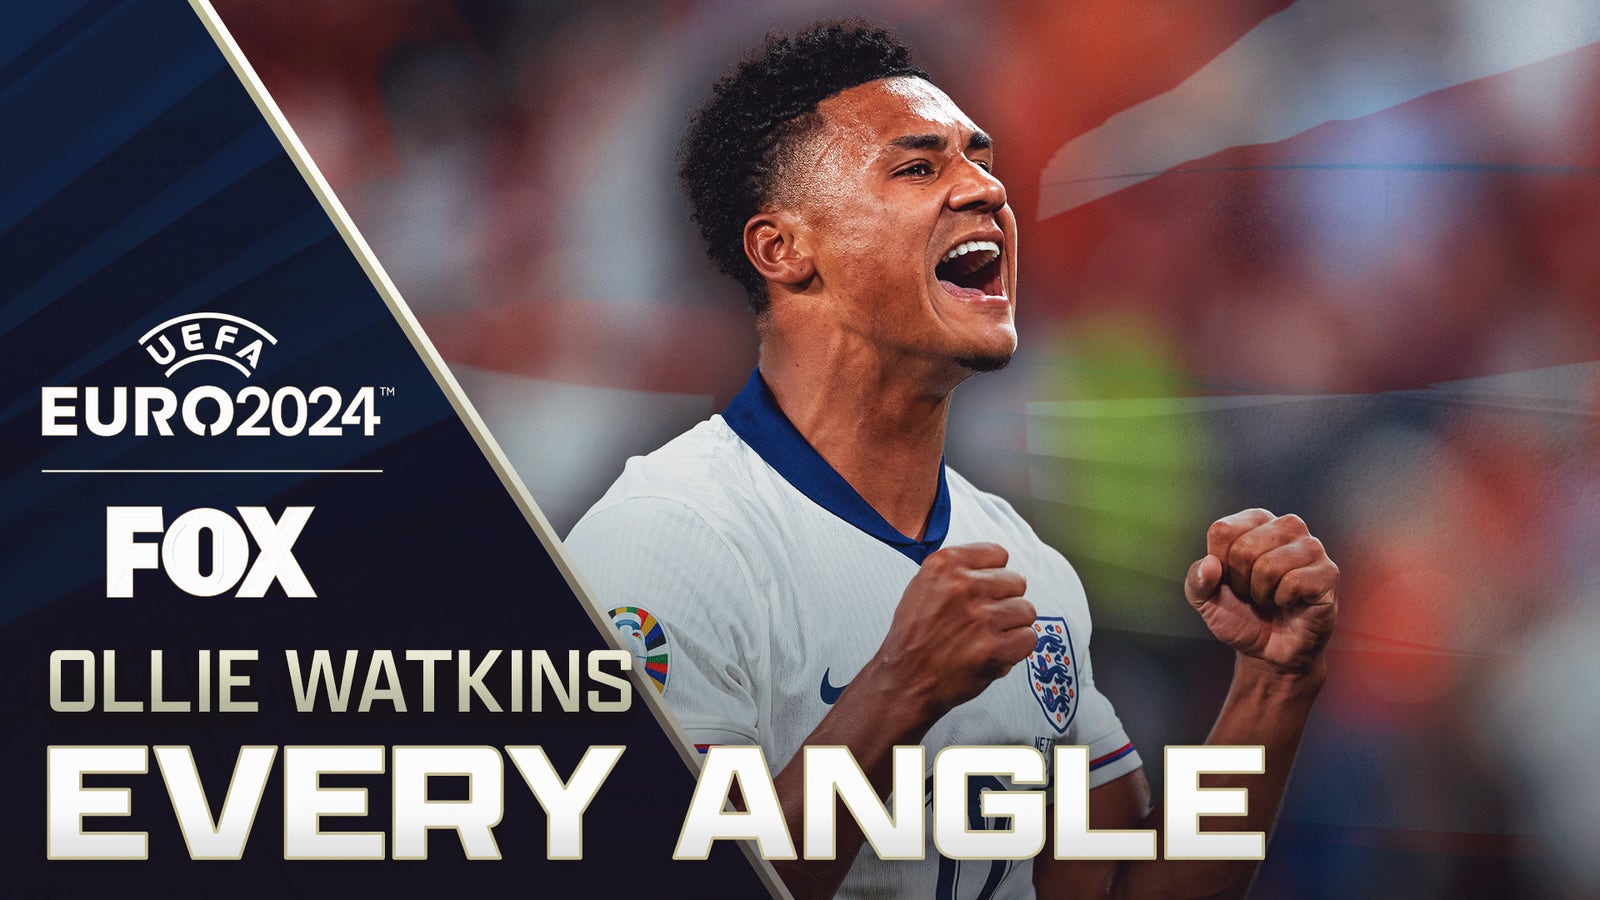 England's Ollie Watkins scores GAME-WINNING goal in 90' vs. Netherlands